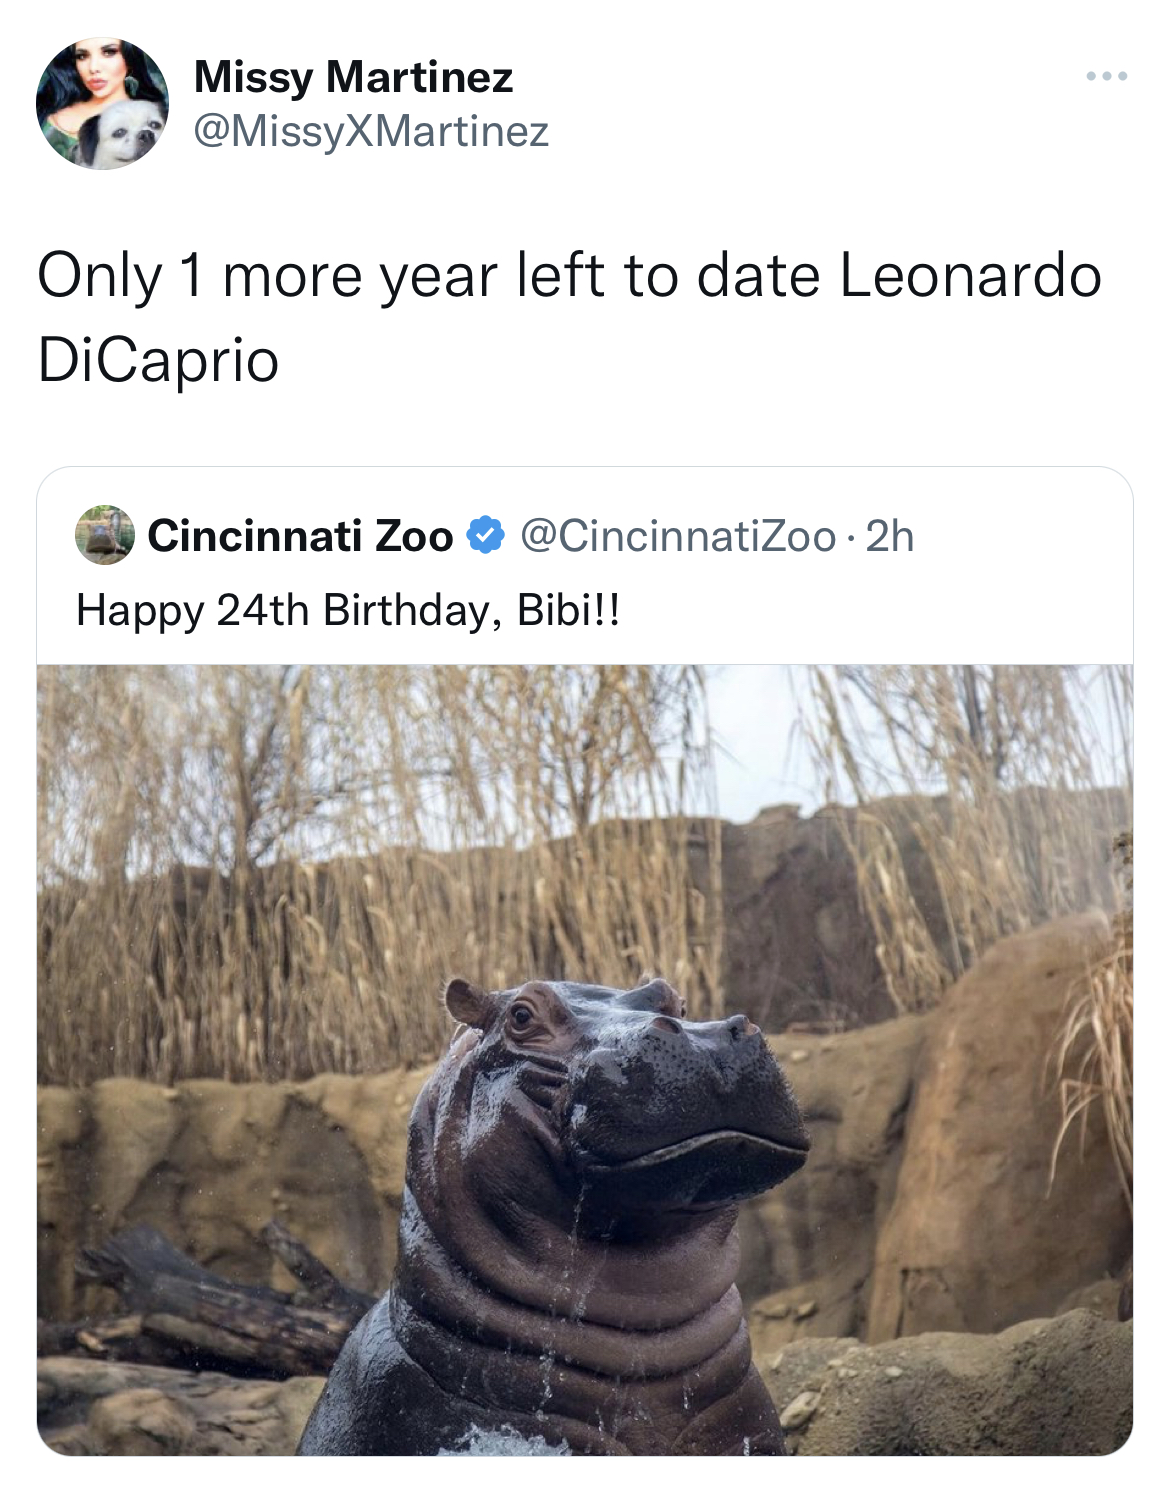 Leonardo DiCaprio Girlfriend Memes - fauna - Missy Martinez Only 1 more year left to date Leonardo DiCaprio Cincinnati Zoo Happy 24th Birthday, Bibi!!